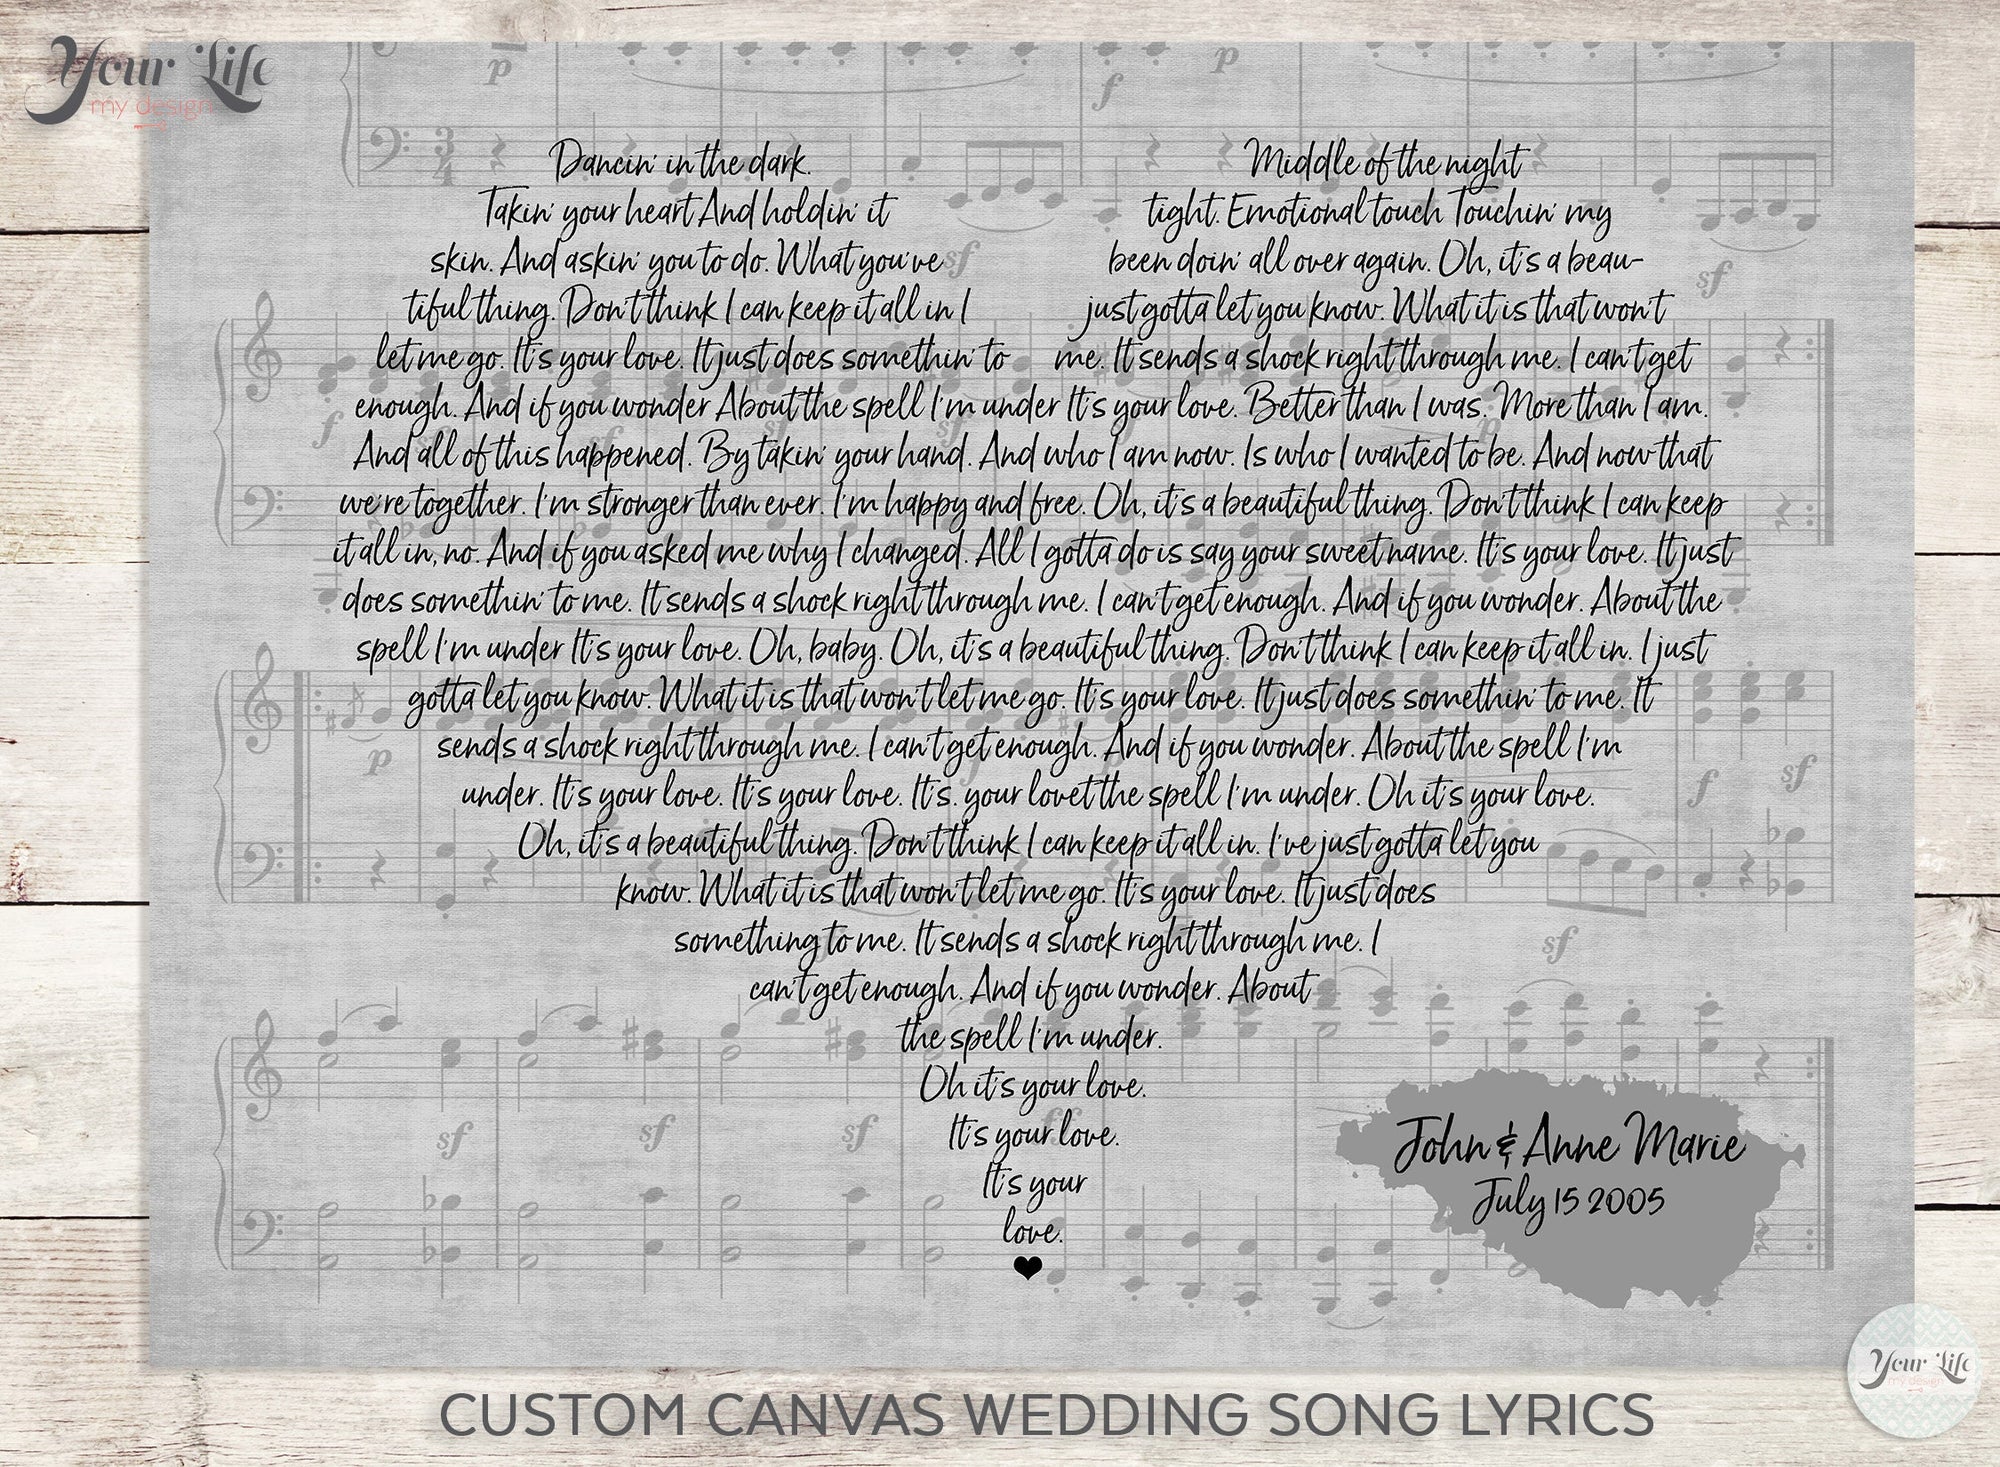 First Dance Lyrics, Photo and Wedding Song Lyrics, Photo with Wedding Vows